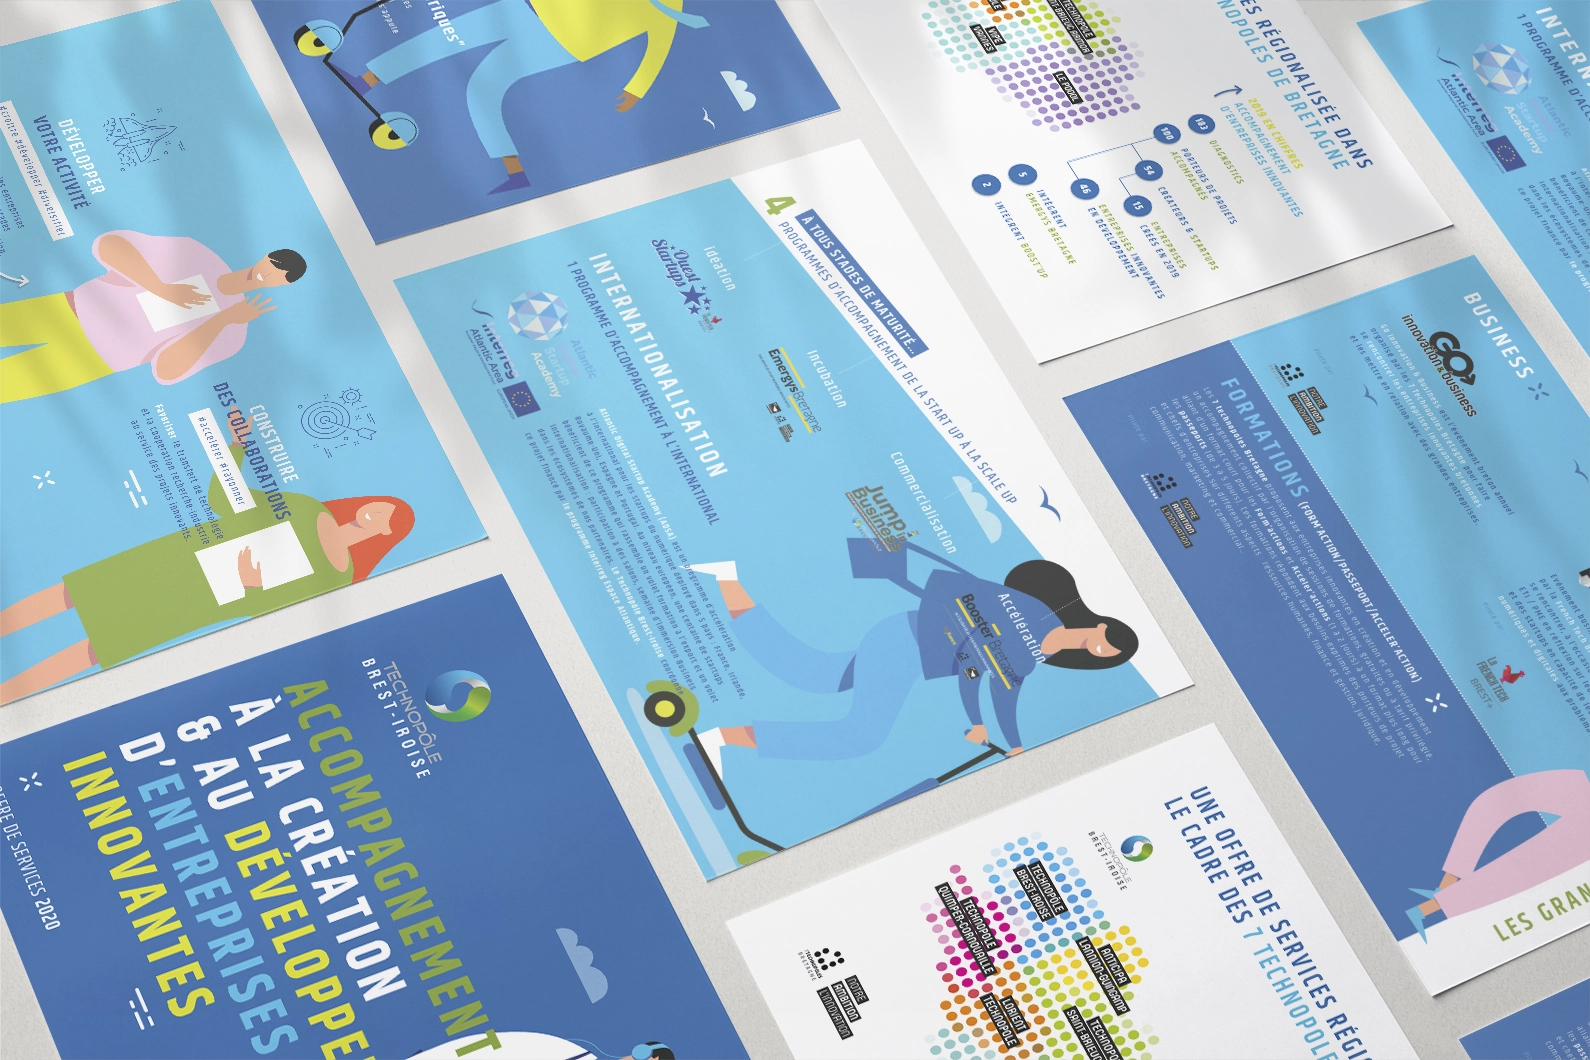 offre-de-service-technopole-brest-iroise-brochure-illustrations-brochure-severine-chaussy